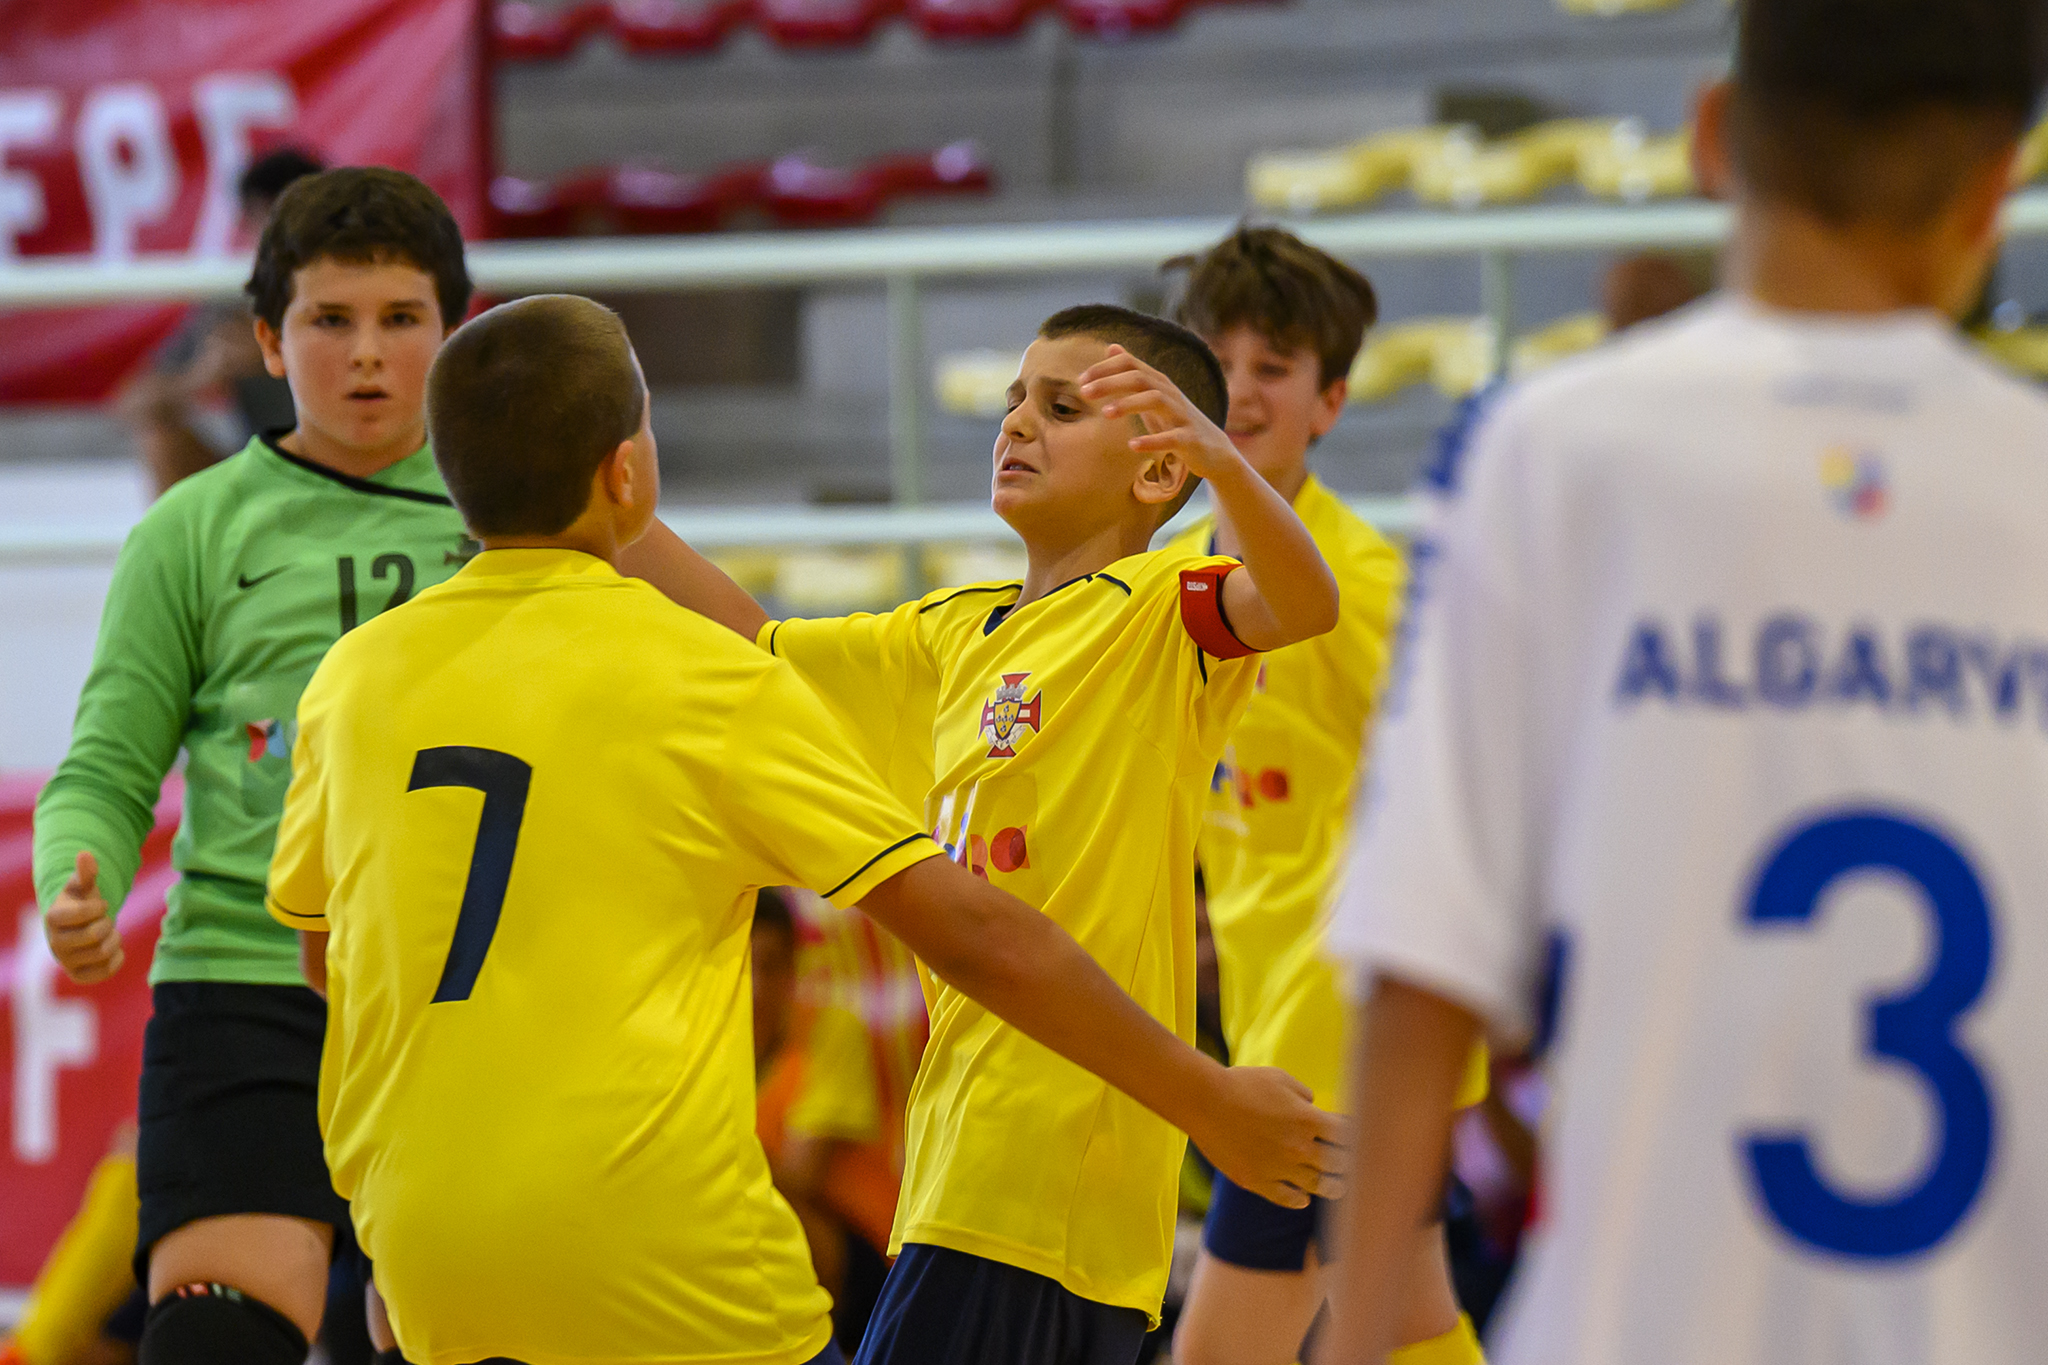 TIA SUB-13 - Futsal: vitória sobre o Algarve